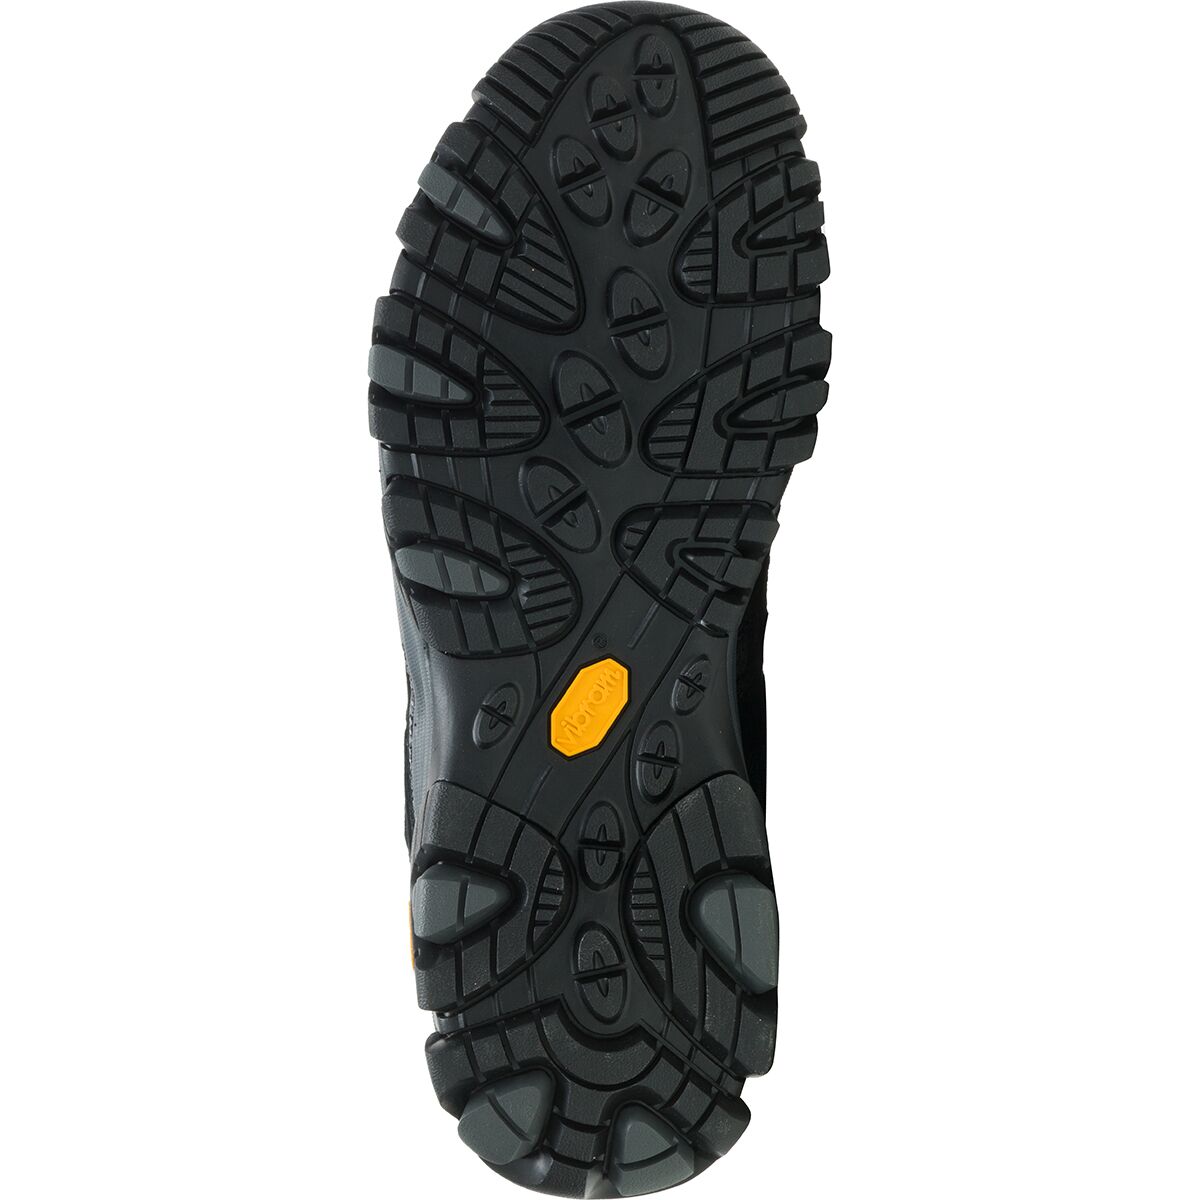 Merrell Moab 3 Mid Hiking Boot - Men's - Footwear